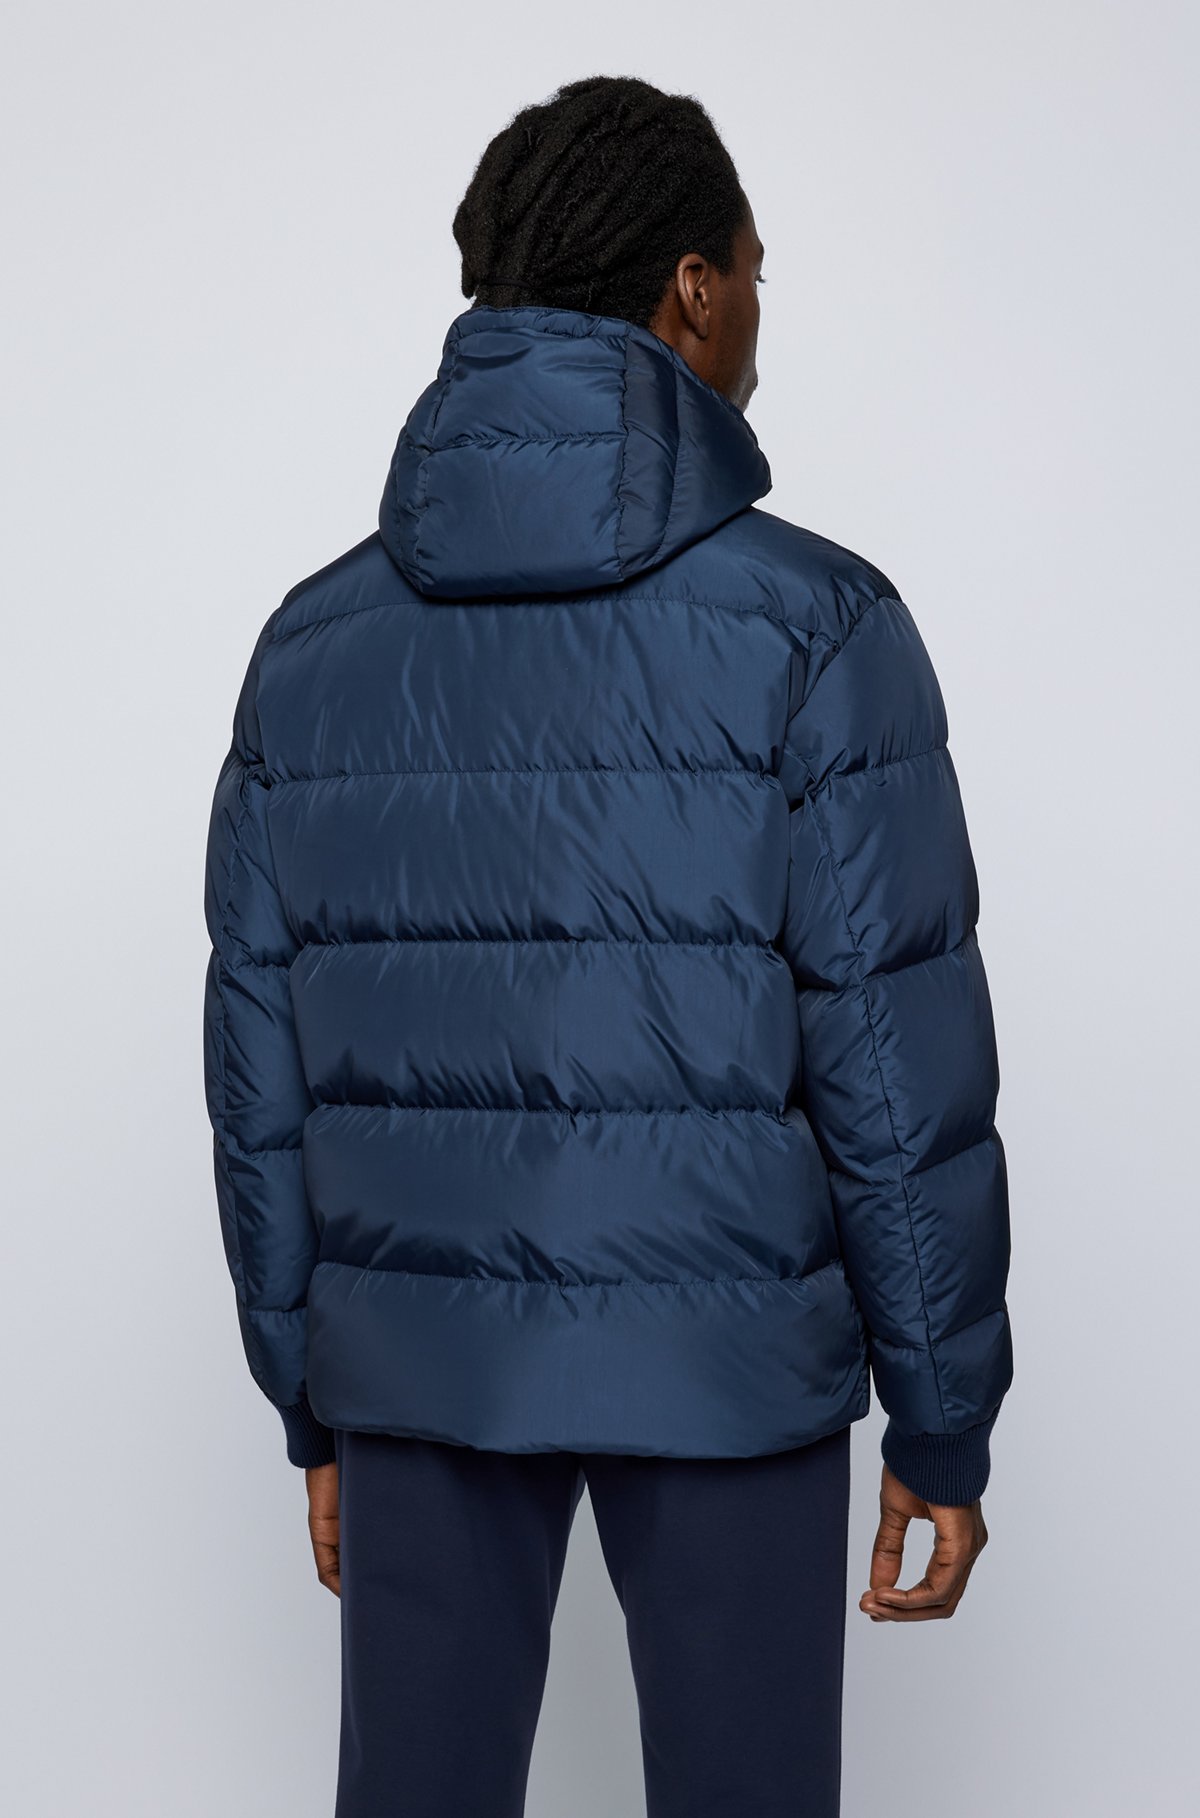 Uitrusting censuur Refrein BOSS - Regular-fit puffer jacket in water-repellent fabric